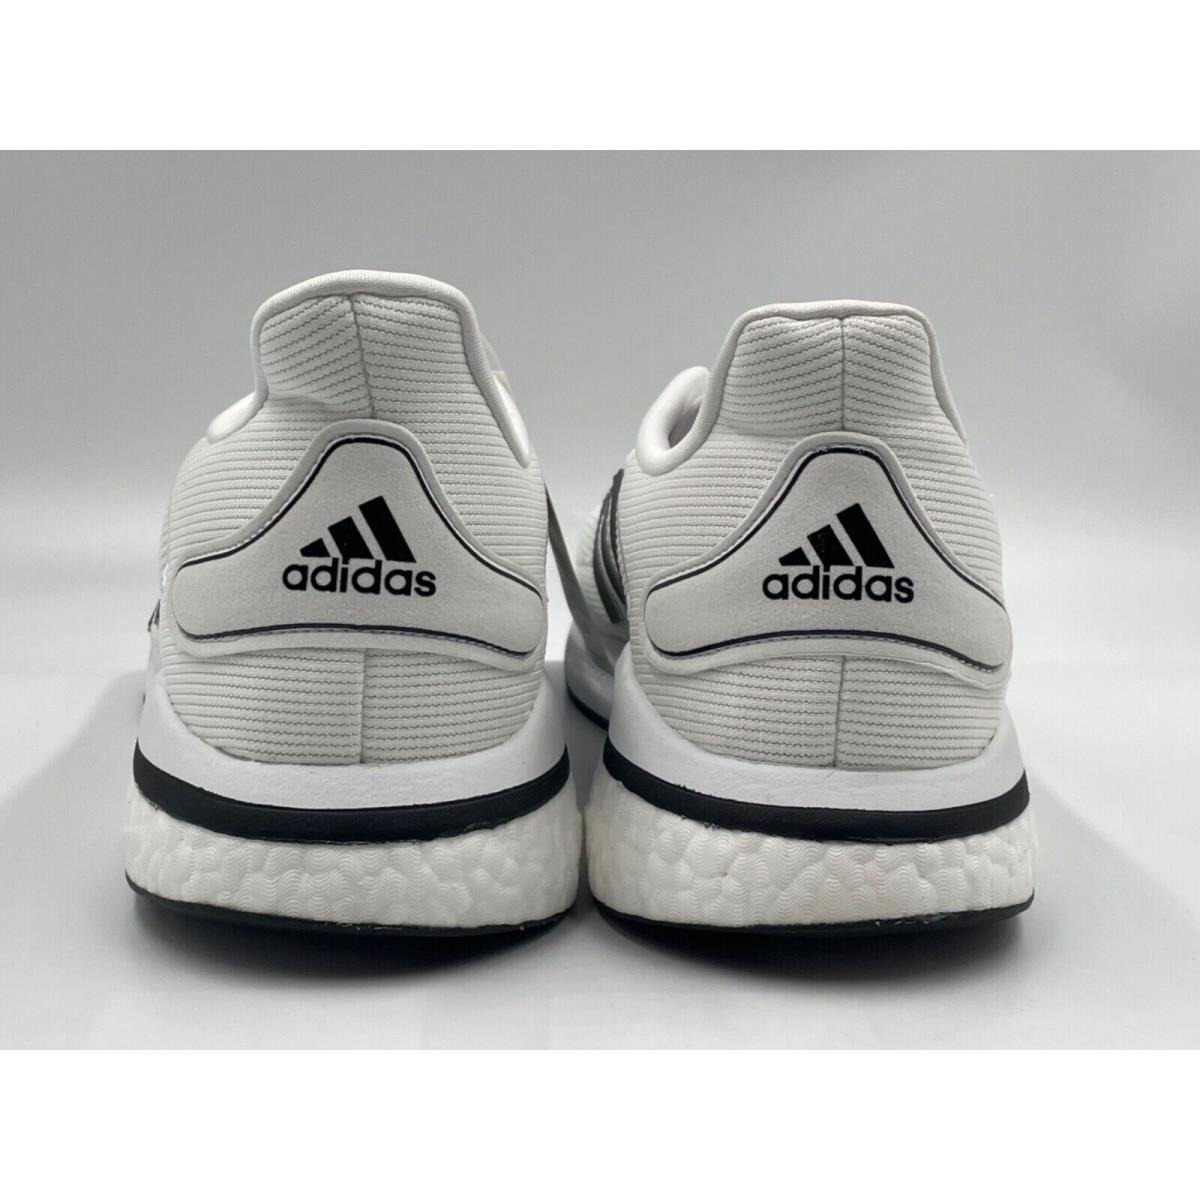 Adidas shoes Supernova - White Black Gray 0